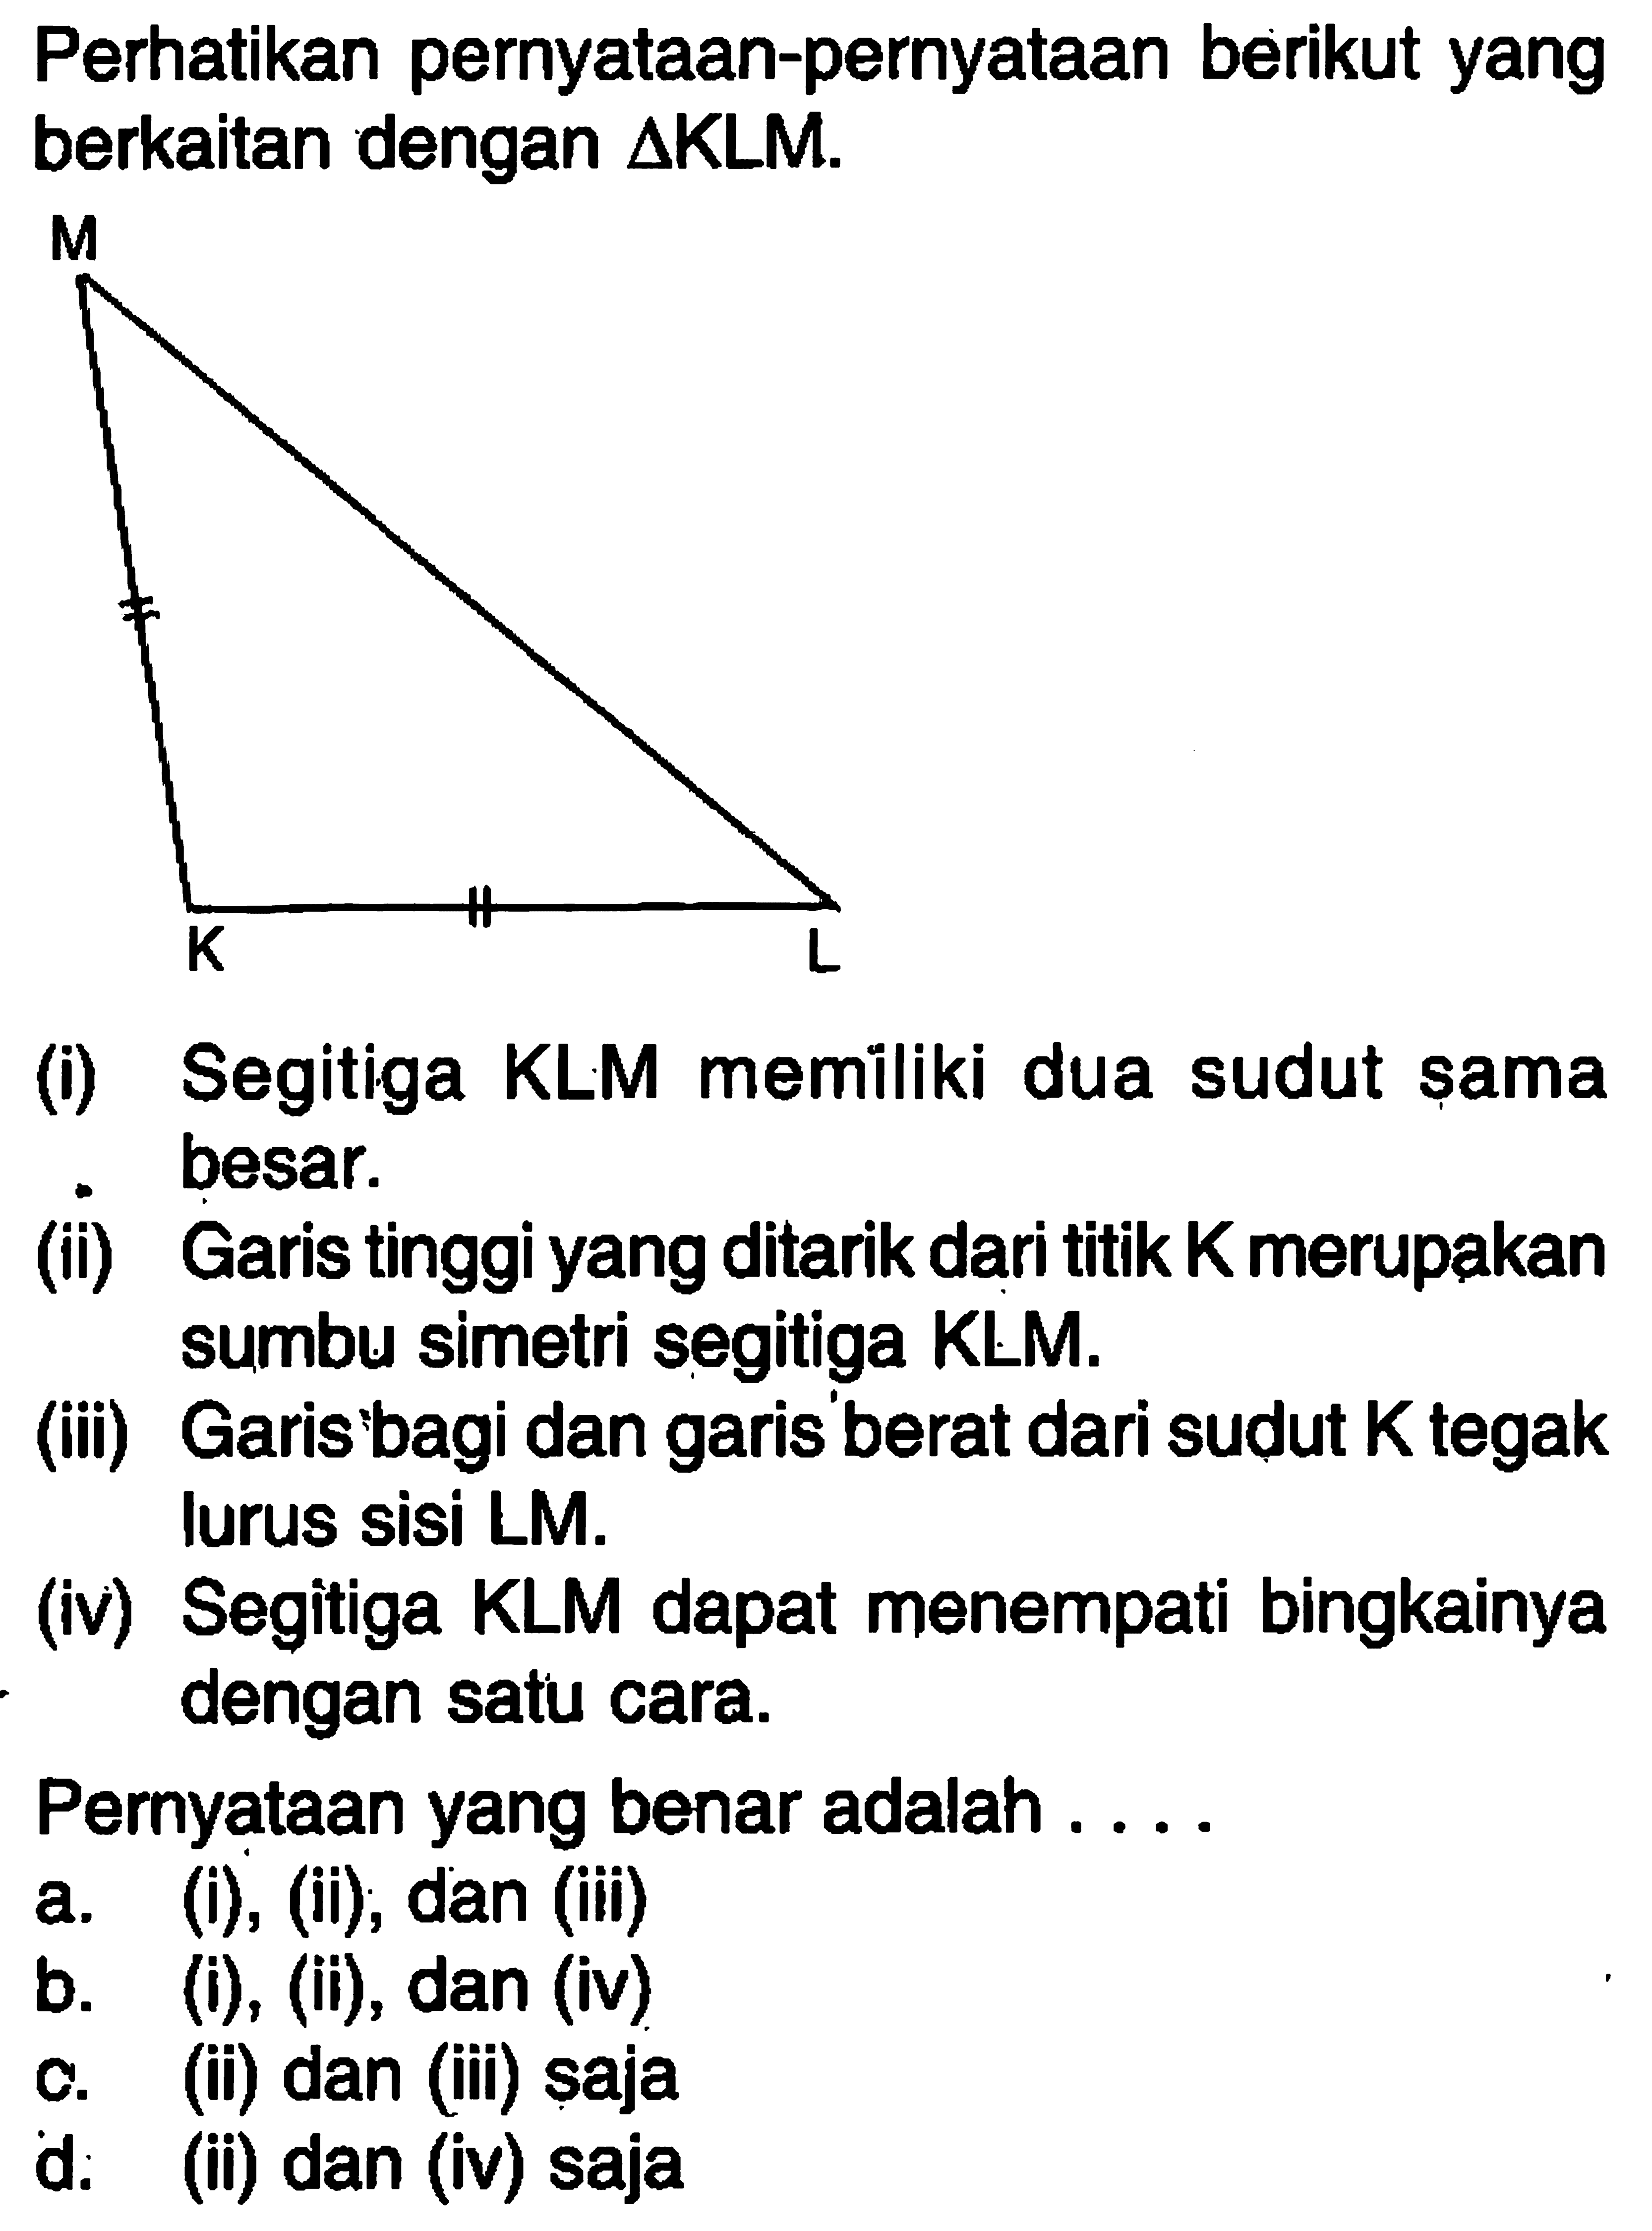 Perhatikan pernyataan-pernyataan berikut yang berkaitan dengan segitiga KLM.(i) Segitiga KLM memiliki dua sudut sama besar.(ii) Garis tinggi yang ditarik dari titik K merupakan sumbu simetri segitiga KLM.(iii) Garis bagi dan garis berat dari sudut K tegak lurus sisi LM.(iv) Segitiga KLM dapat menempati bingkainya dengan satu cara.Pernyataan yang benar adalah....